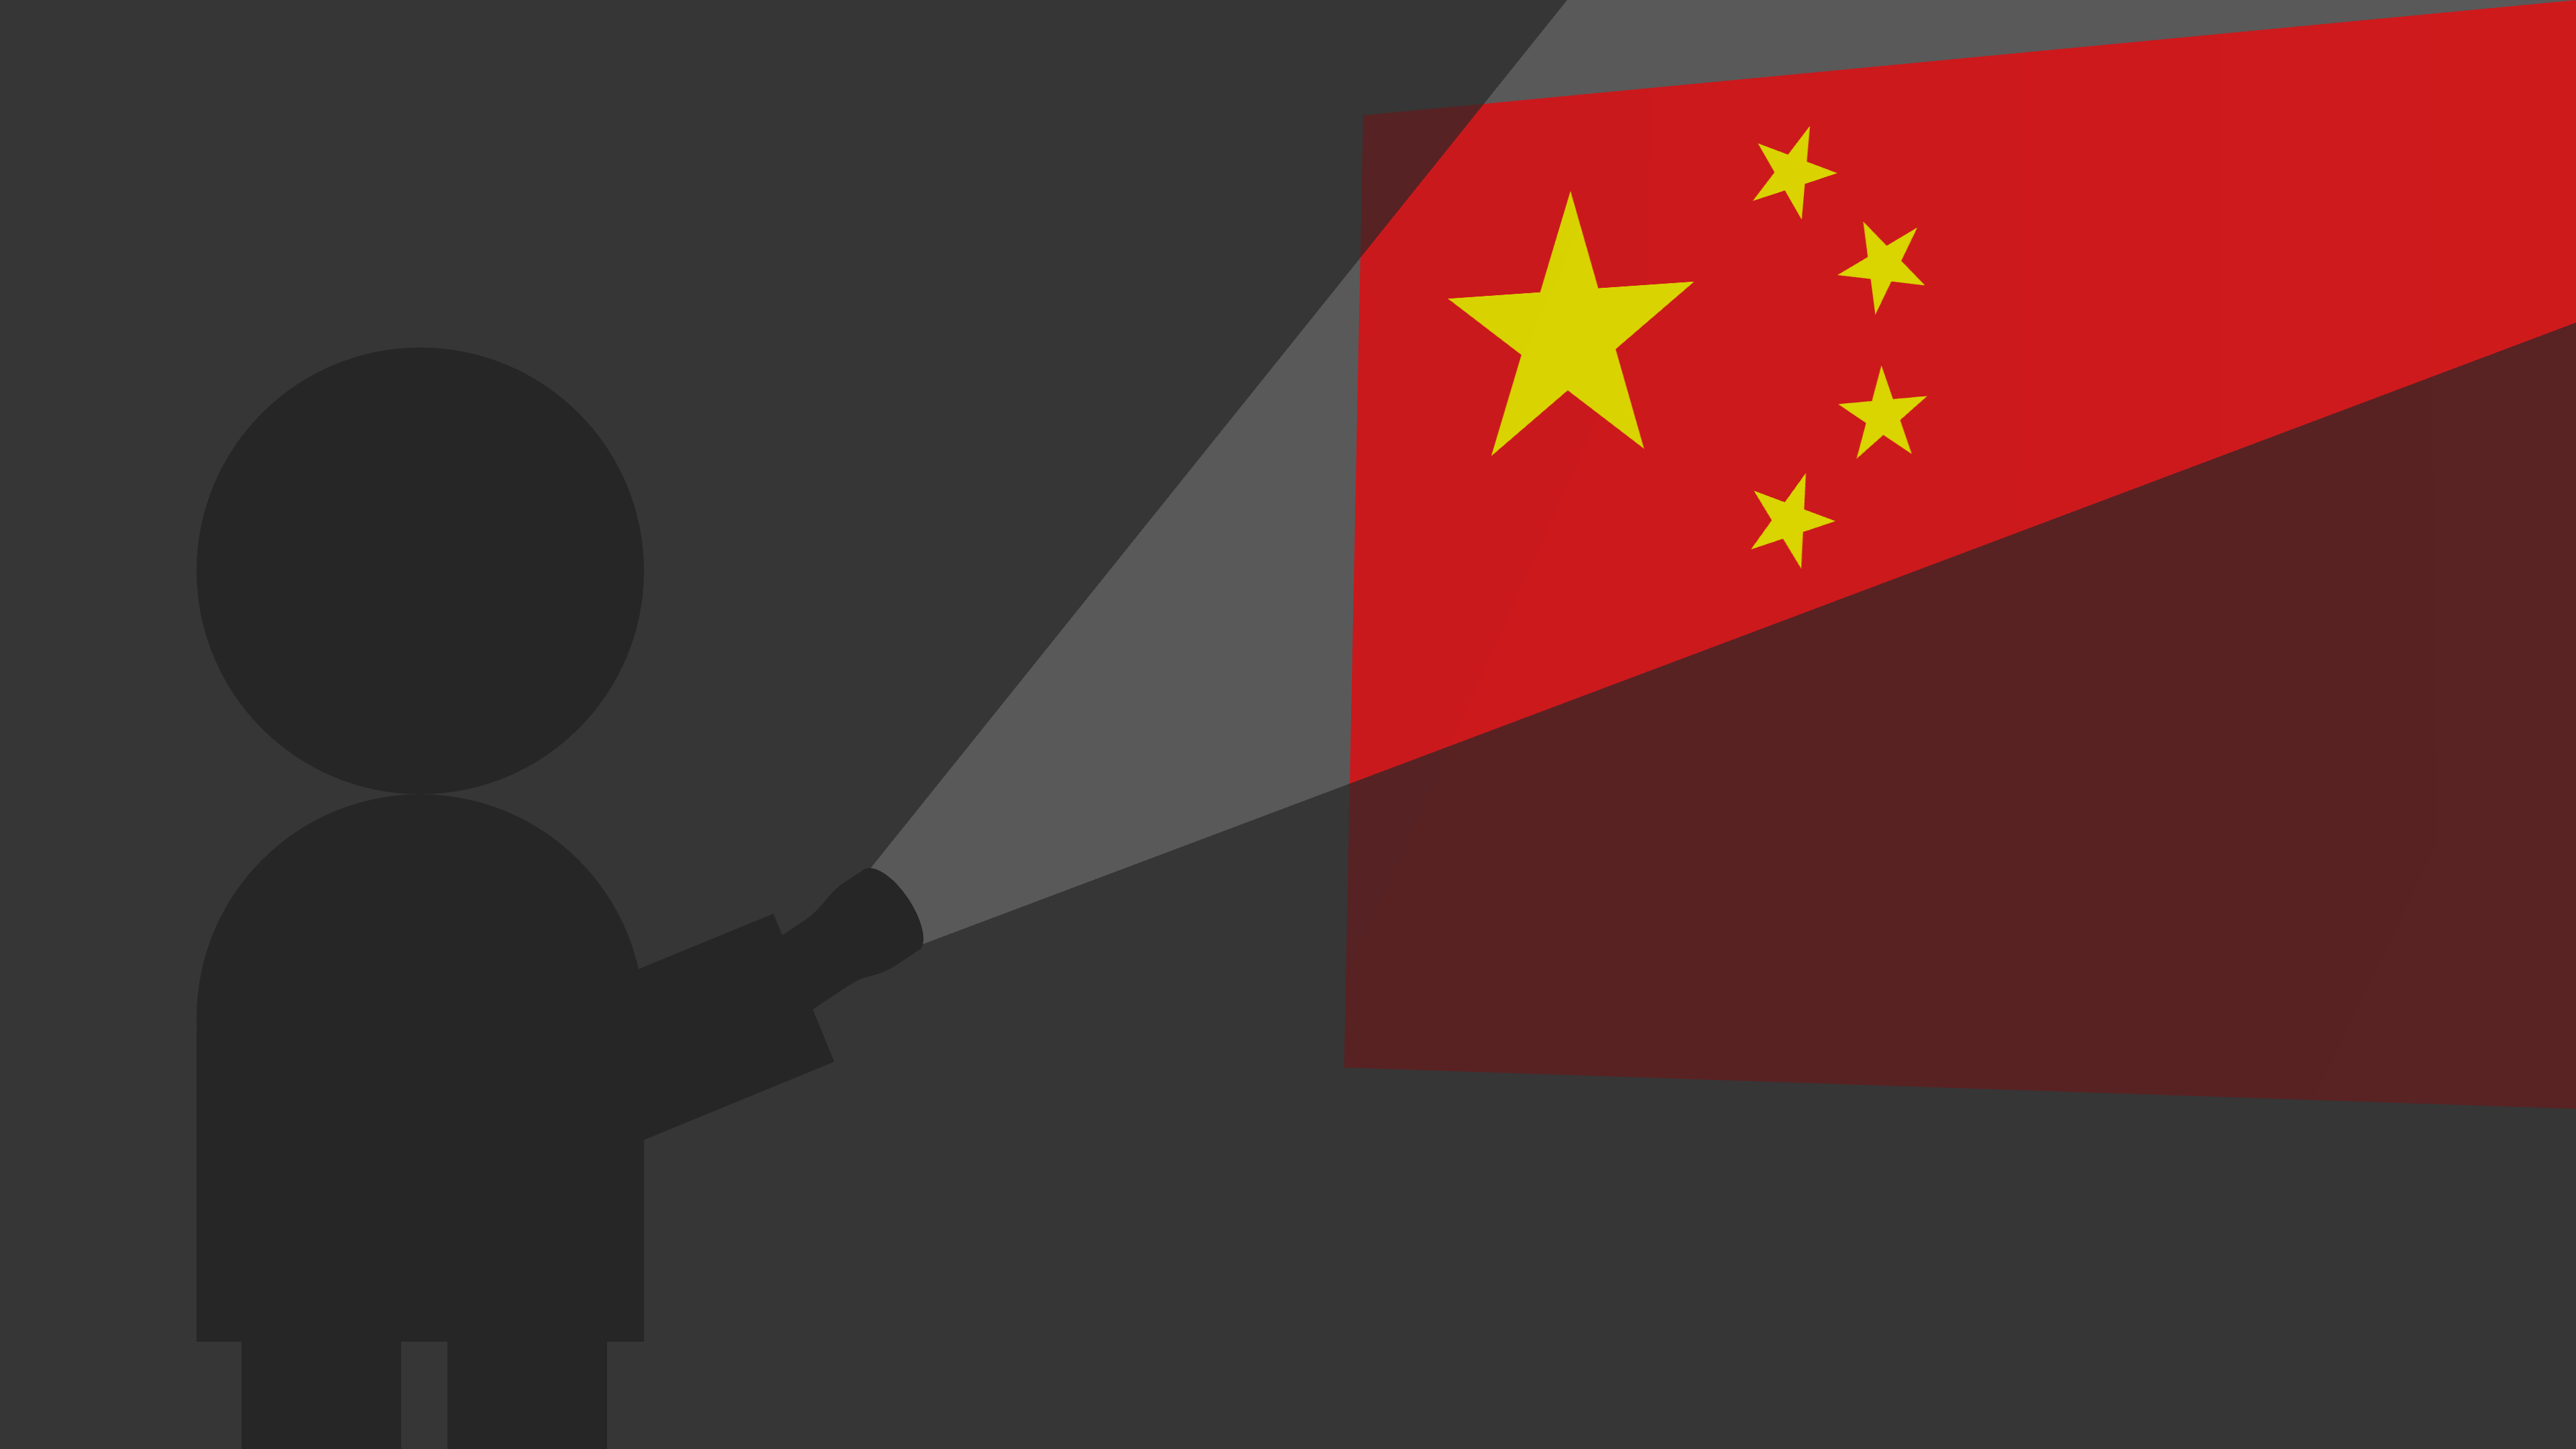 Someone shine’s a light on China’s flag